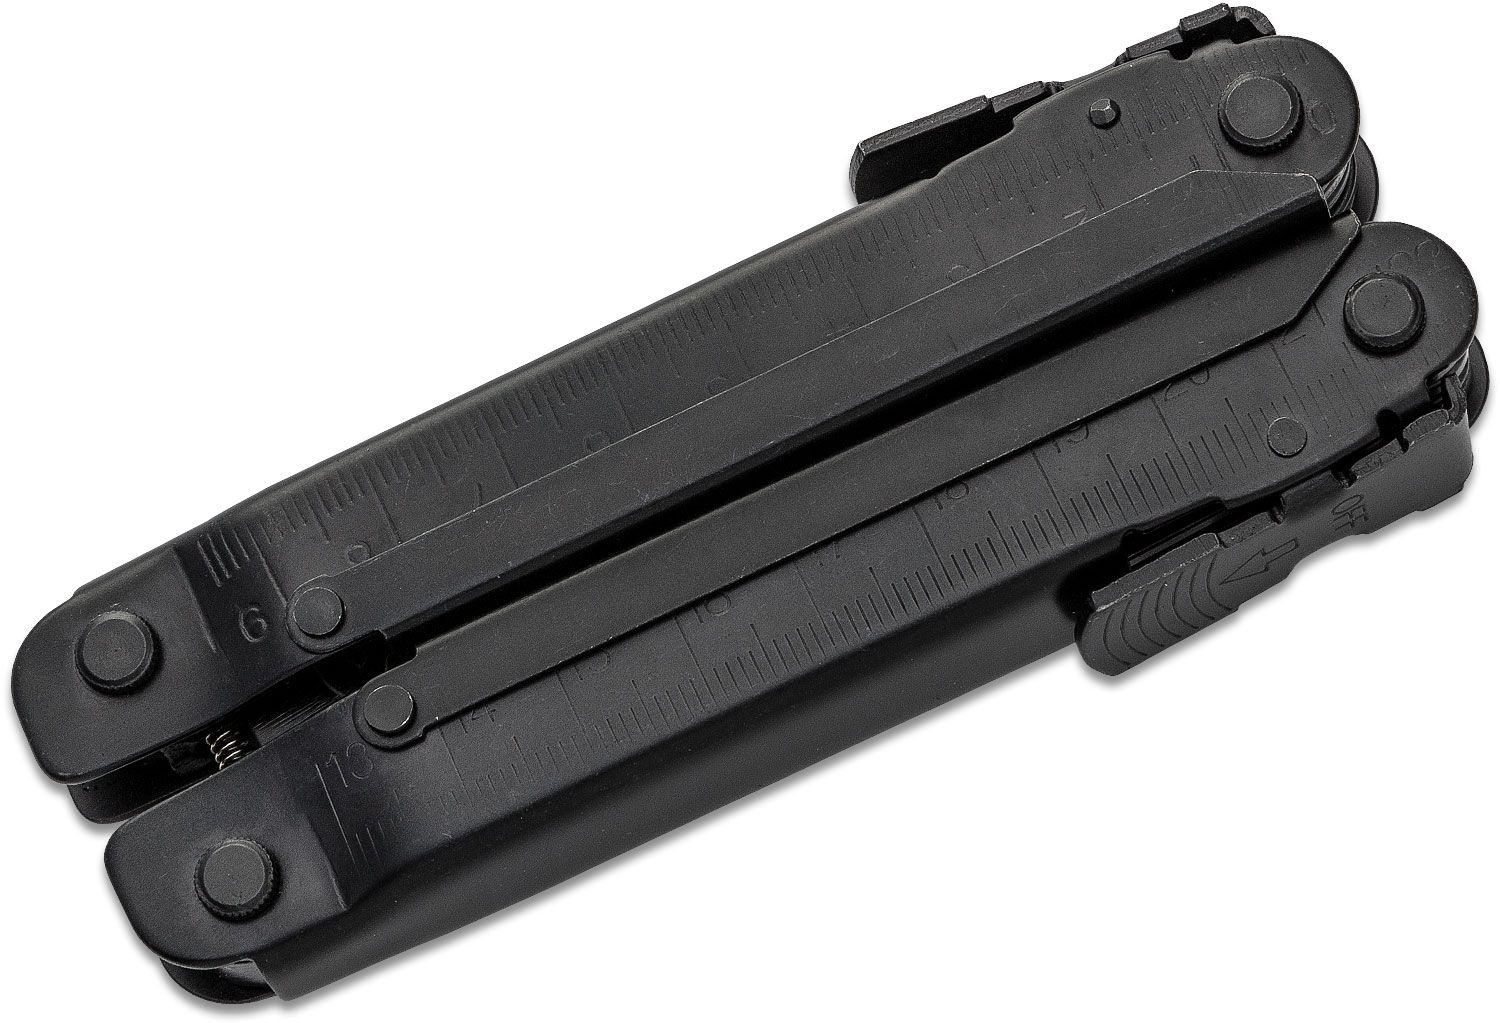 BlackFox BF-200 Multitool Werkzeug Messer Säge Feile ✔️BÖKER TIPP✔️ 09FX004 